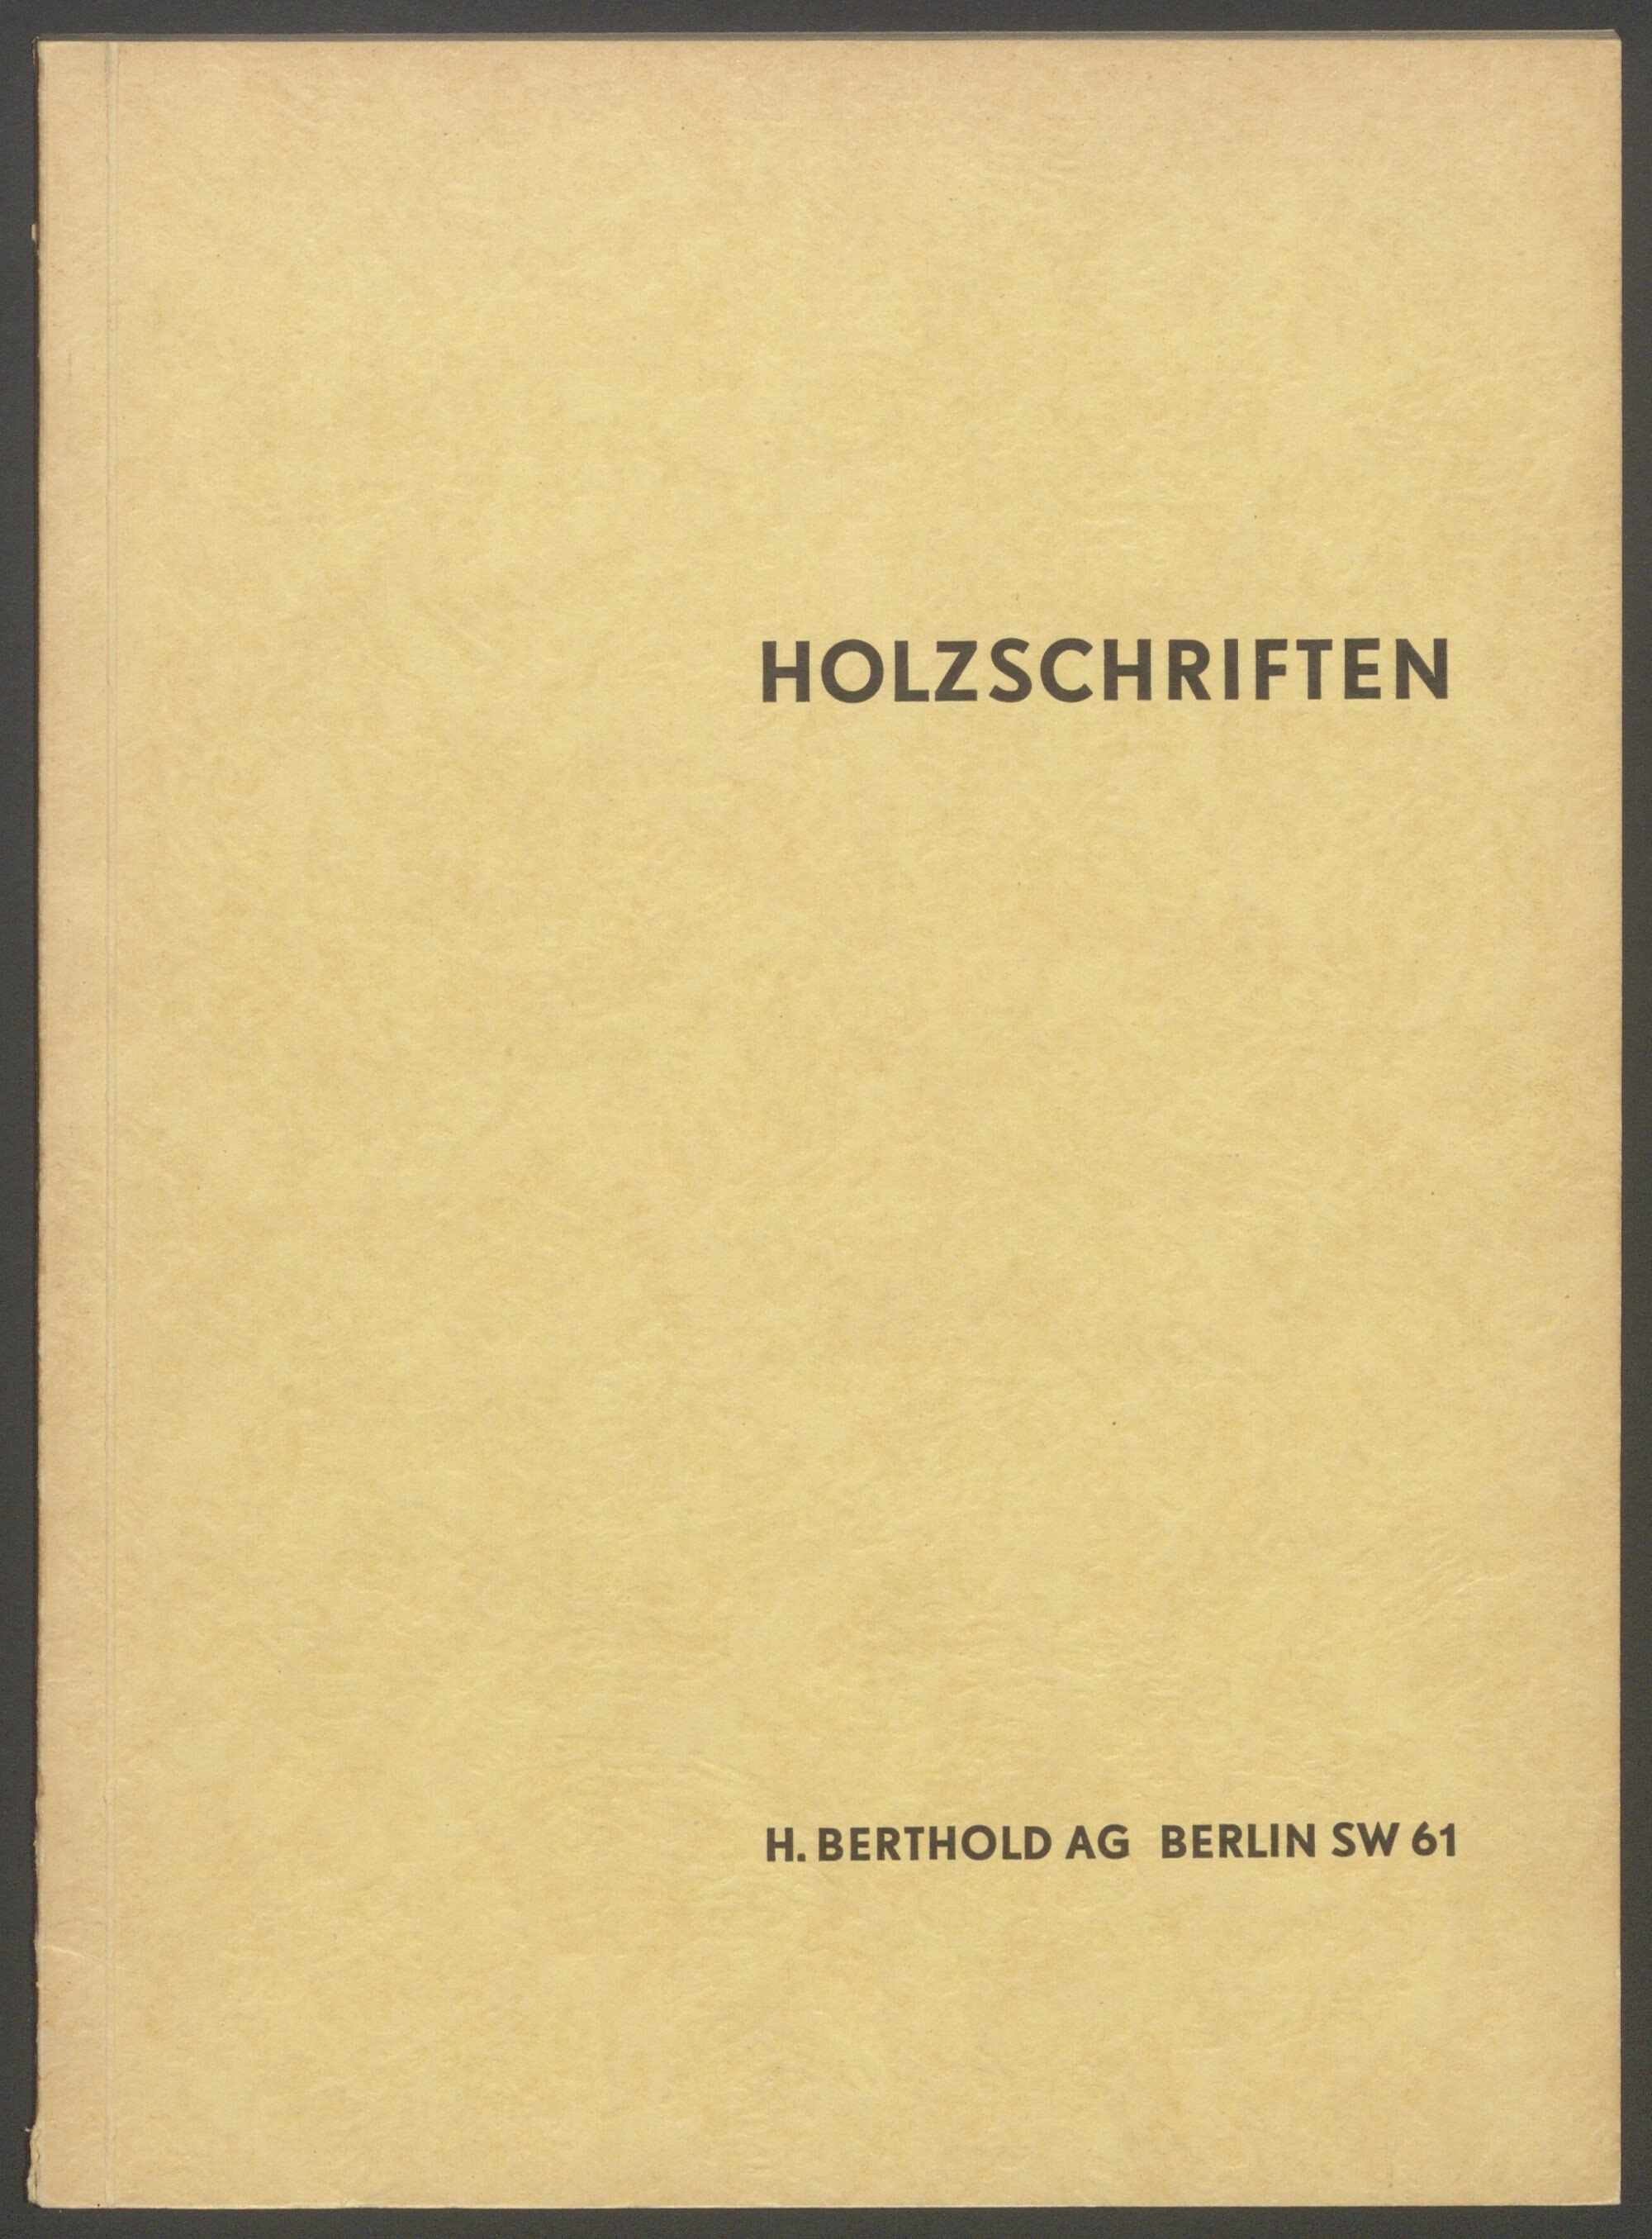 III.2 24180-001 (Stiftung Deutsches Technikmuseum Berlin CC0)